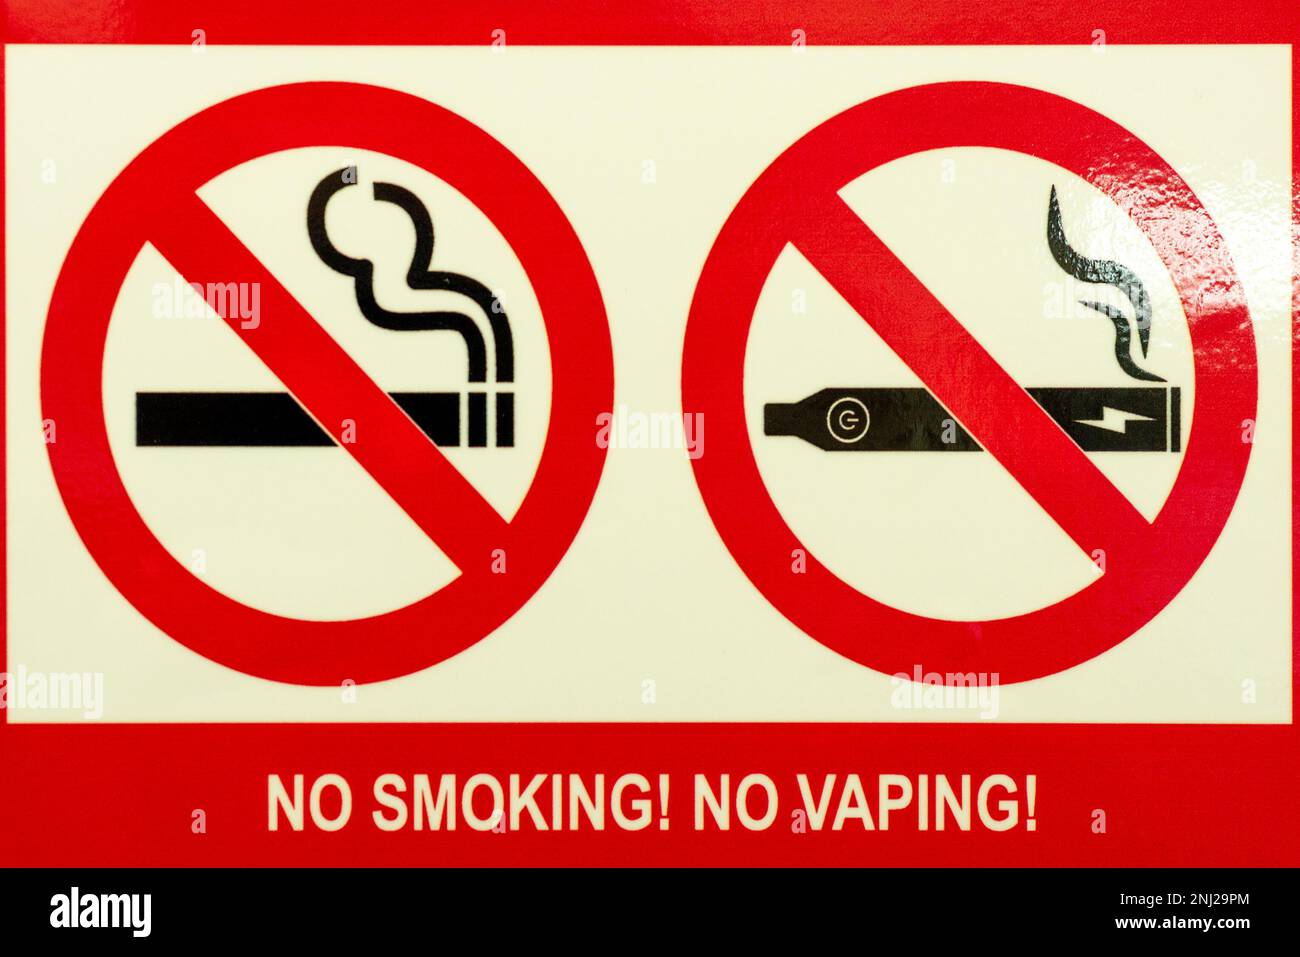 No Smoking No Vaping red warning sticker sign Stock Photo